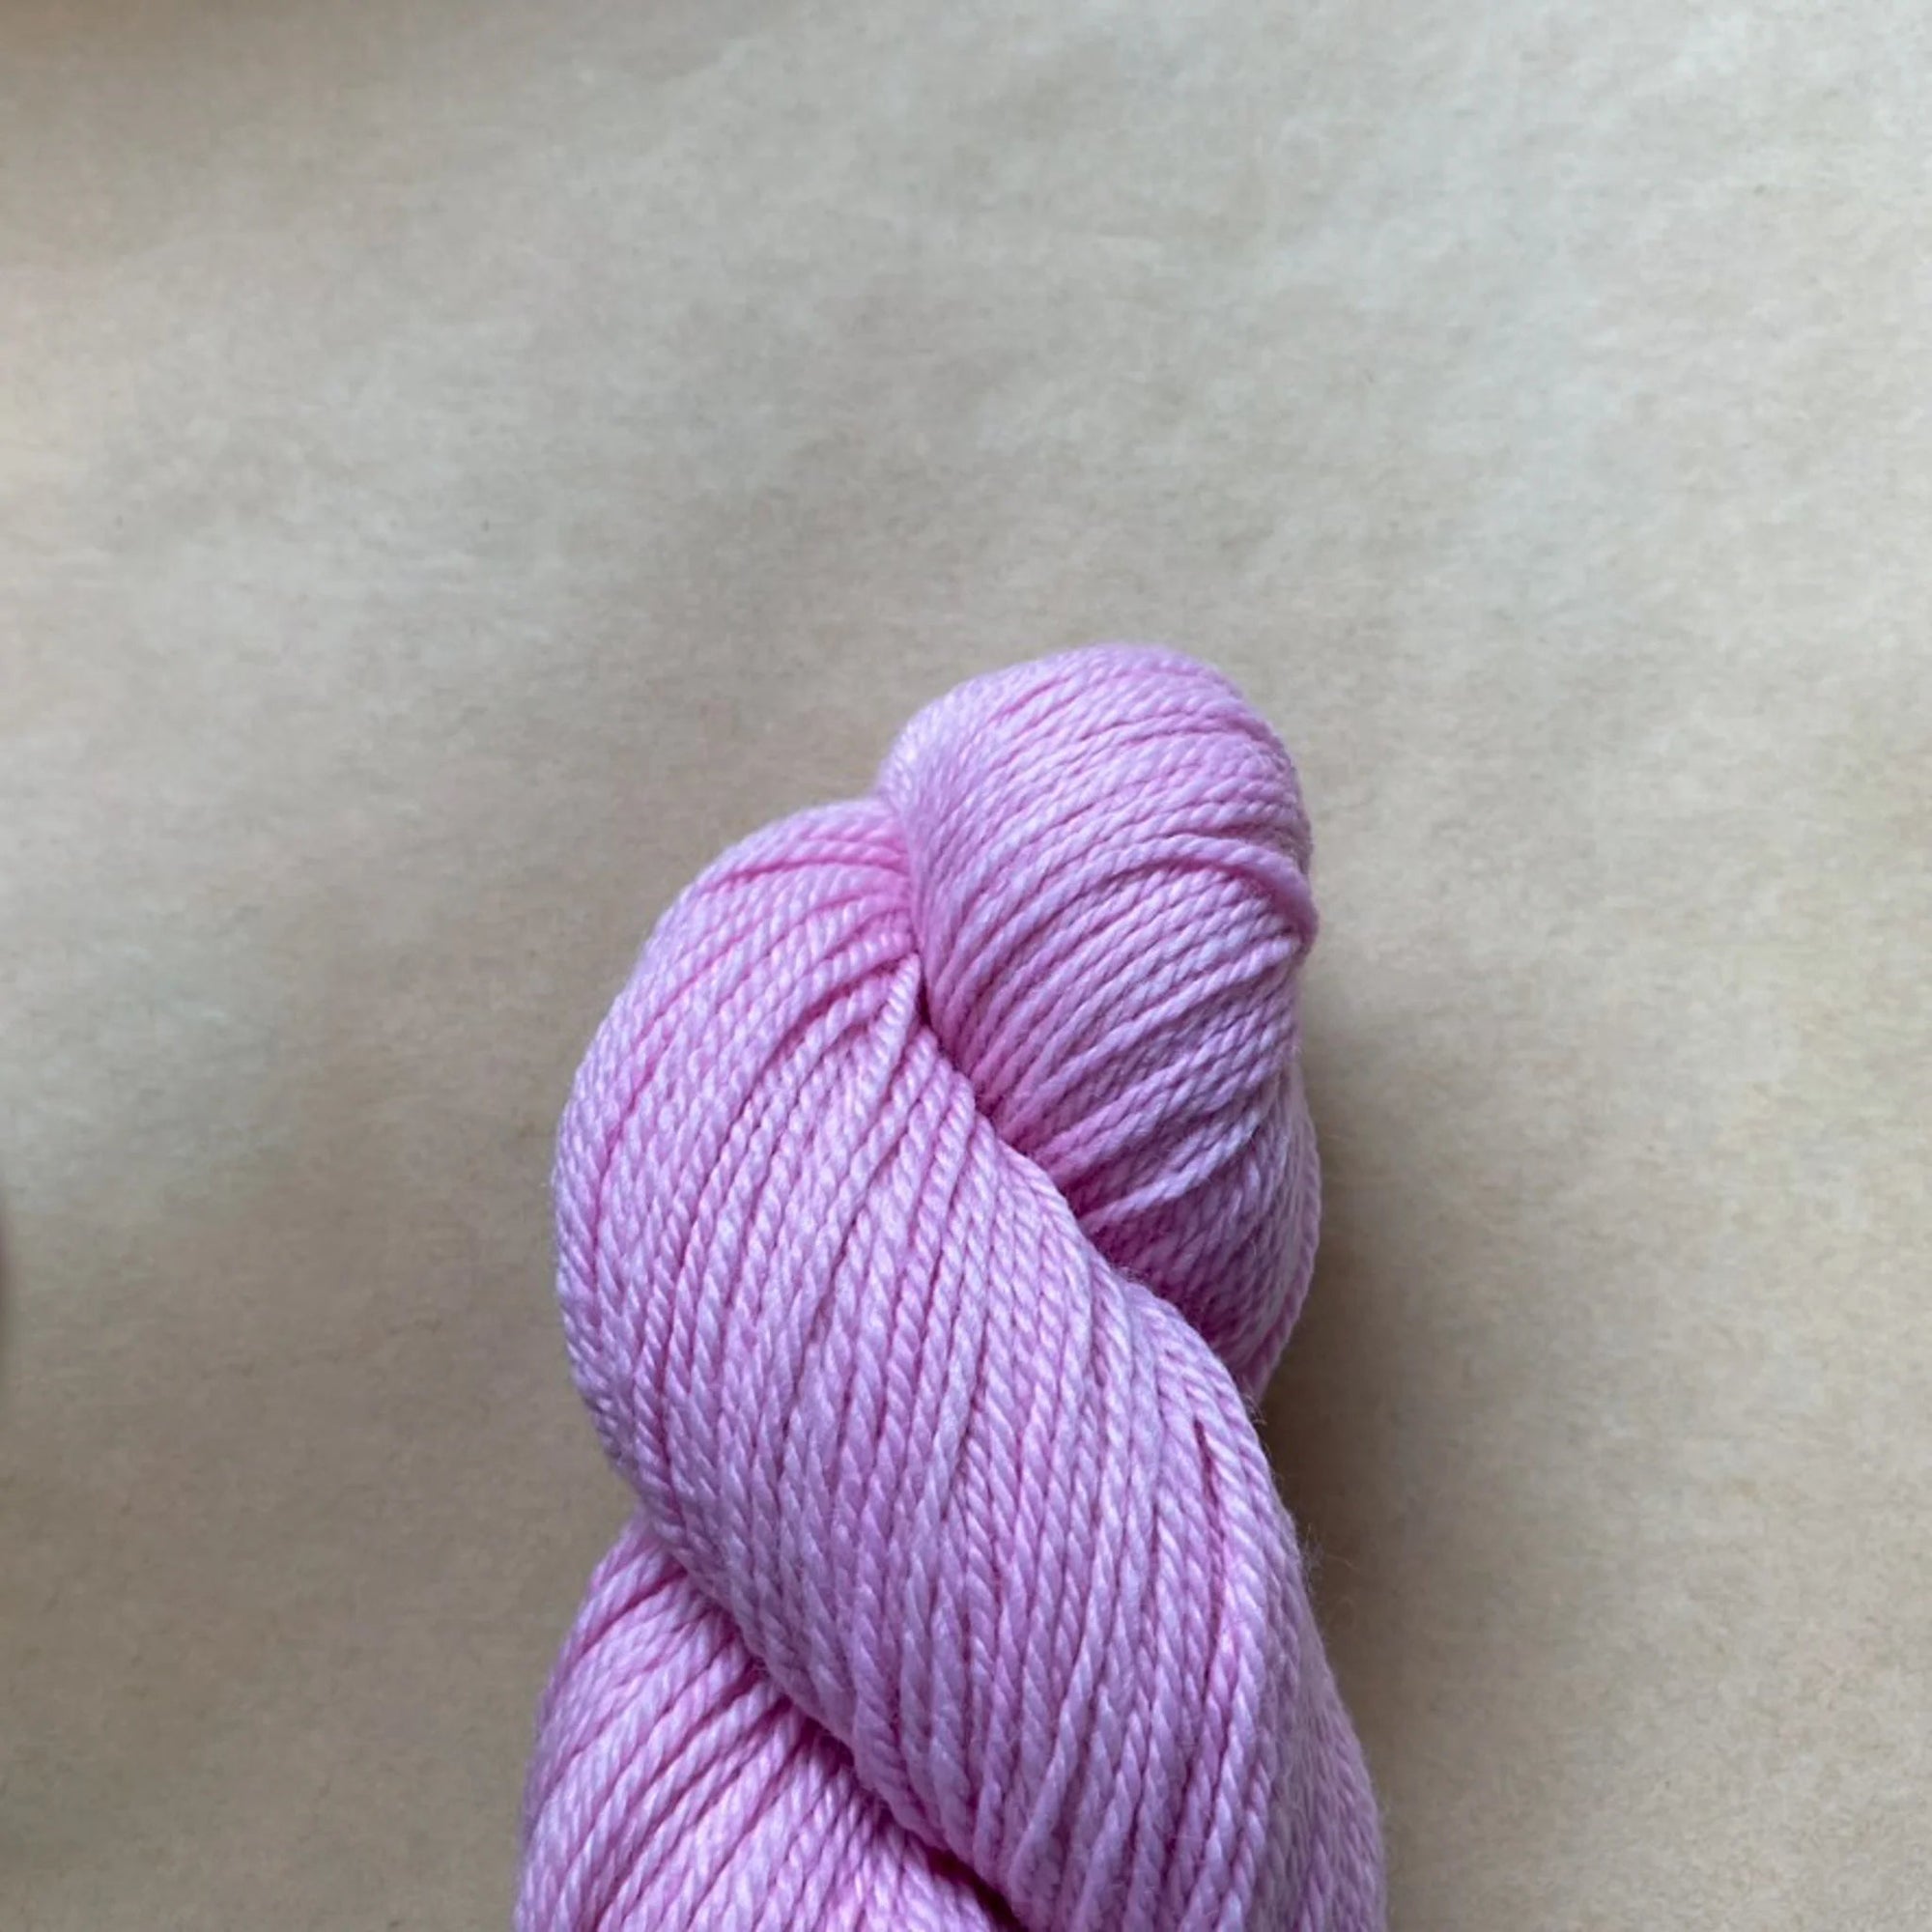 Koigu Jasmine - Koigu - J1171-0011 - The Little Yarn Store